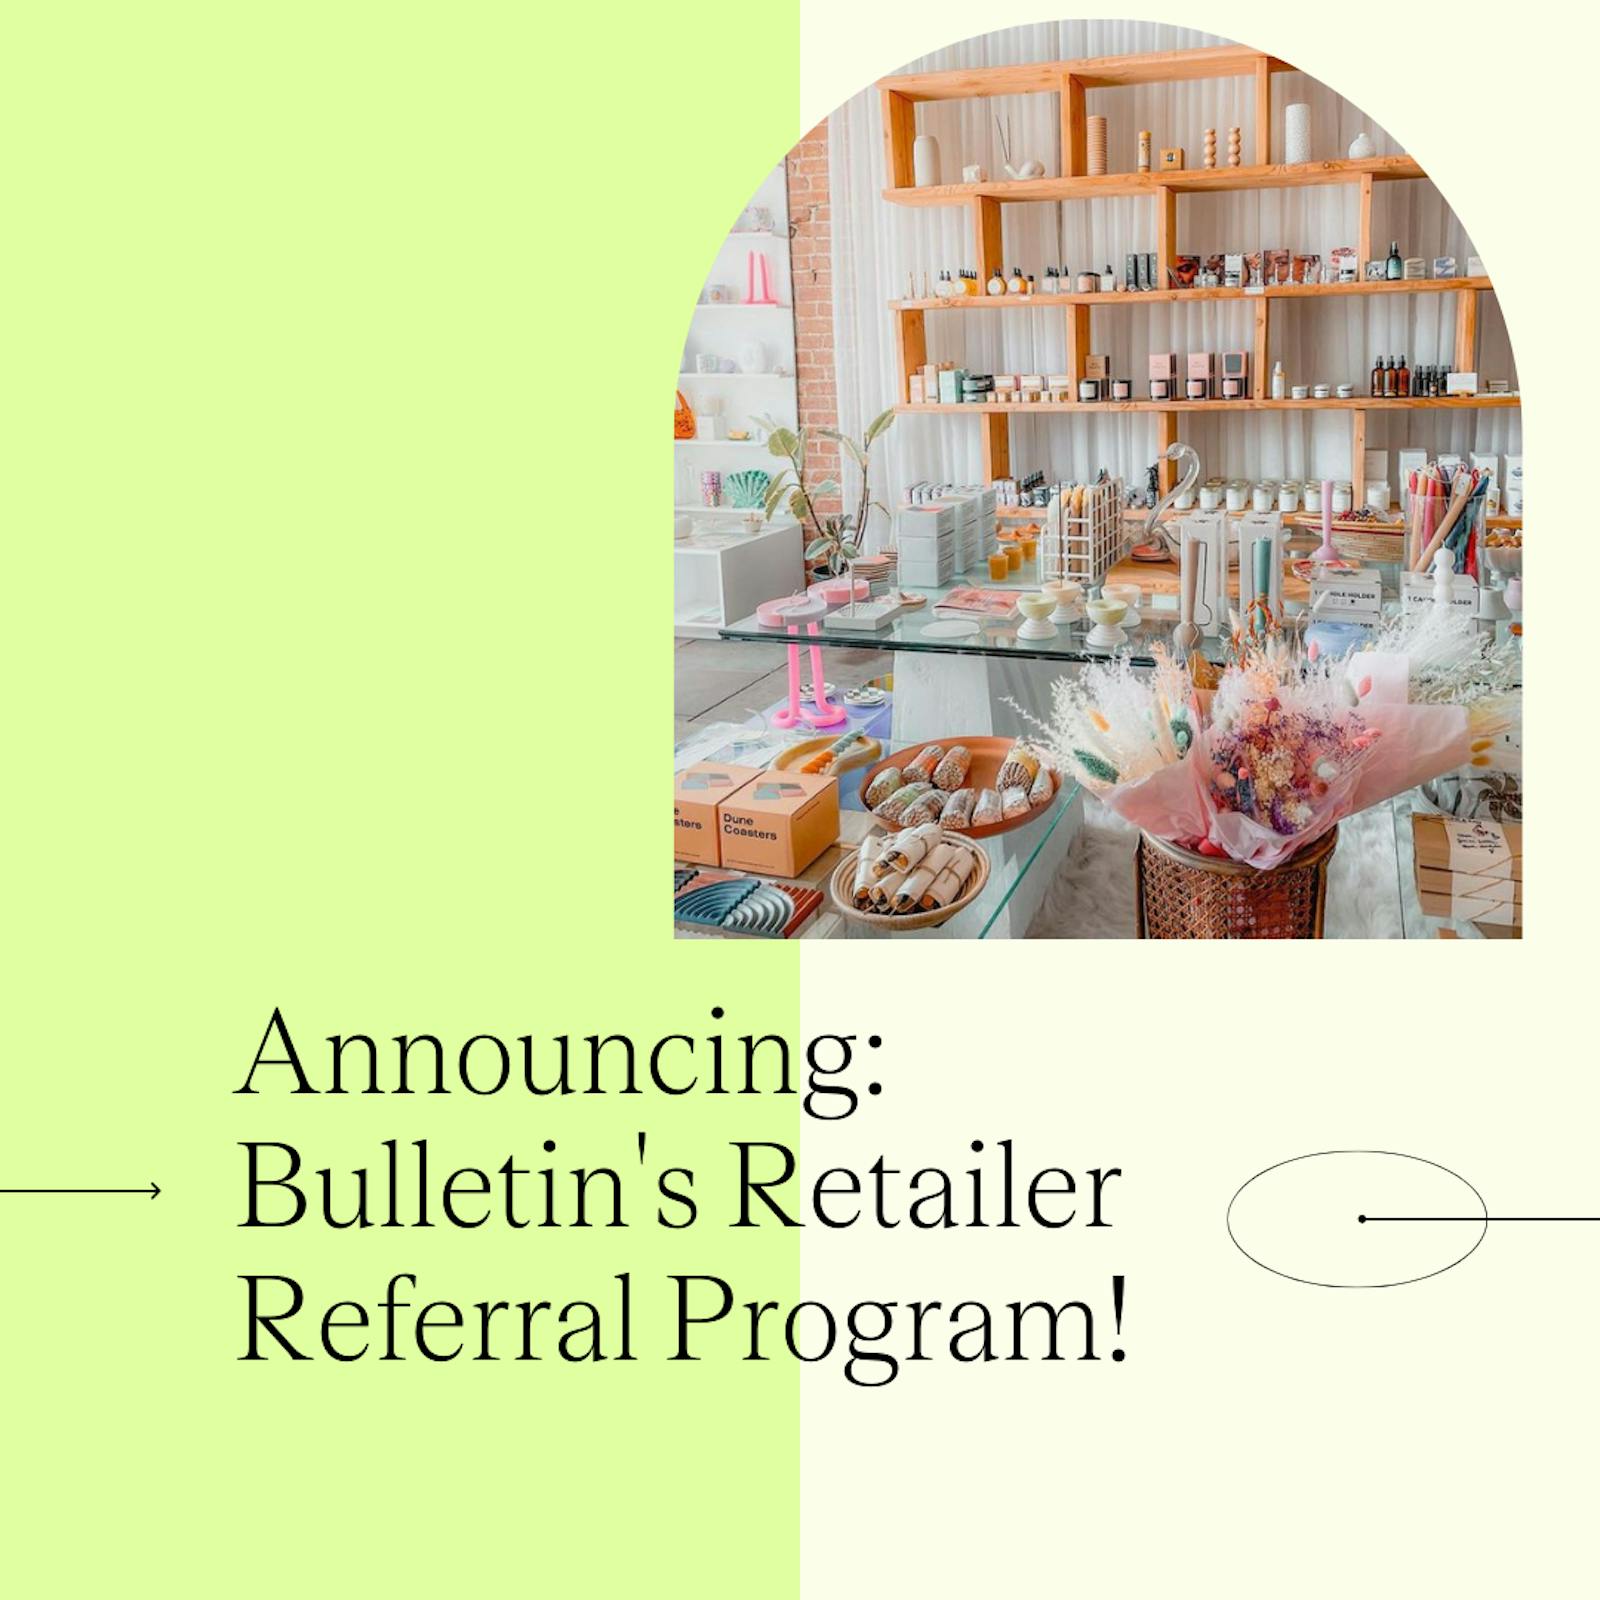 Retailer-to-Retailer Referral Program